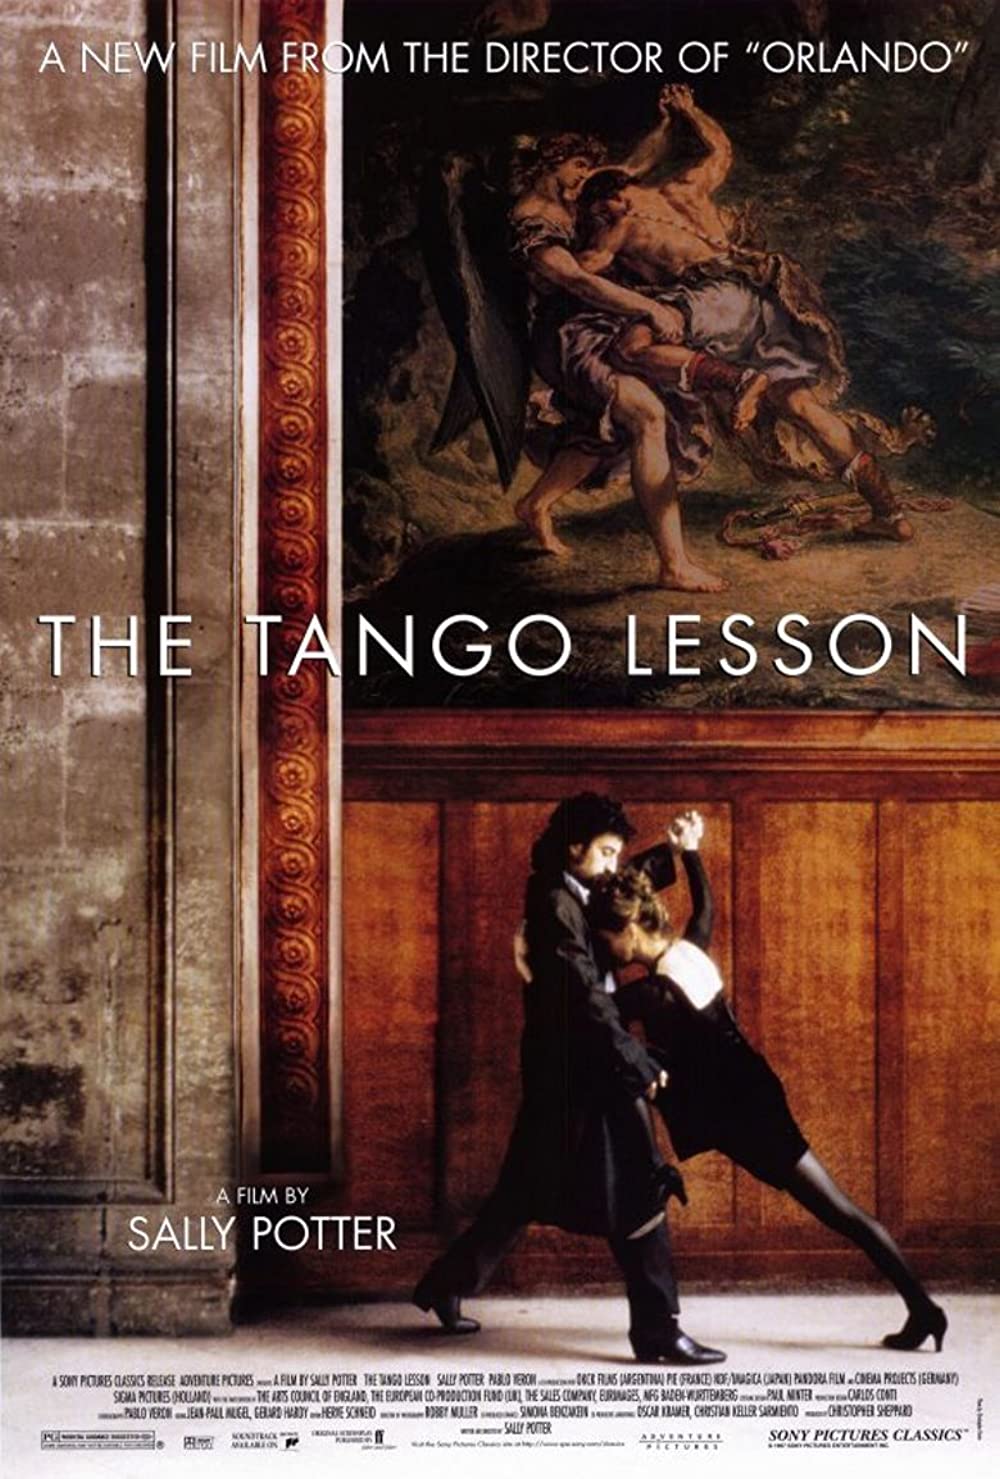 Filmbeschreibung zu Tango Lesson